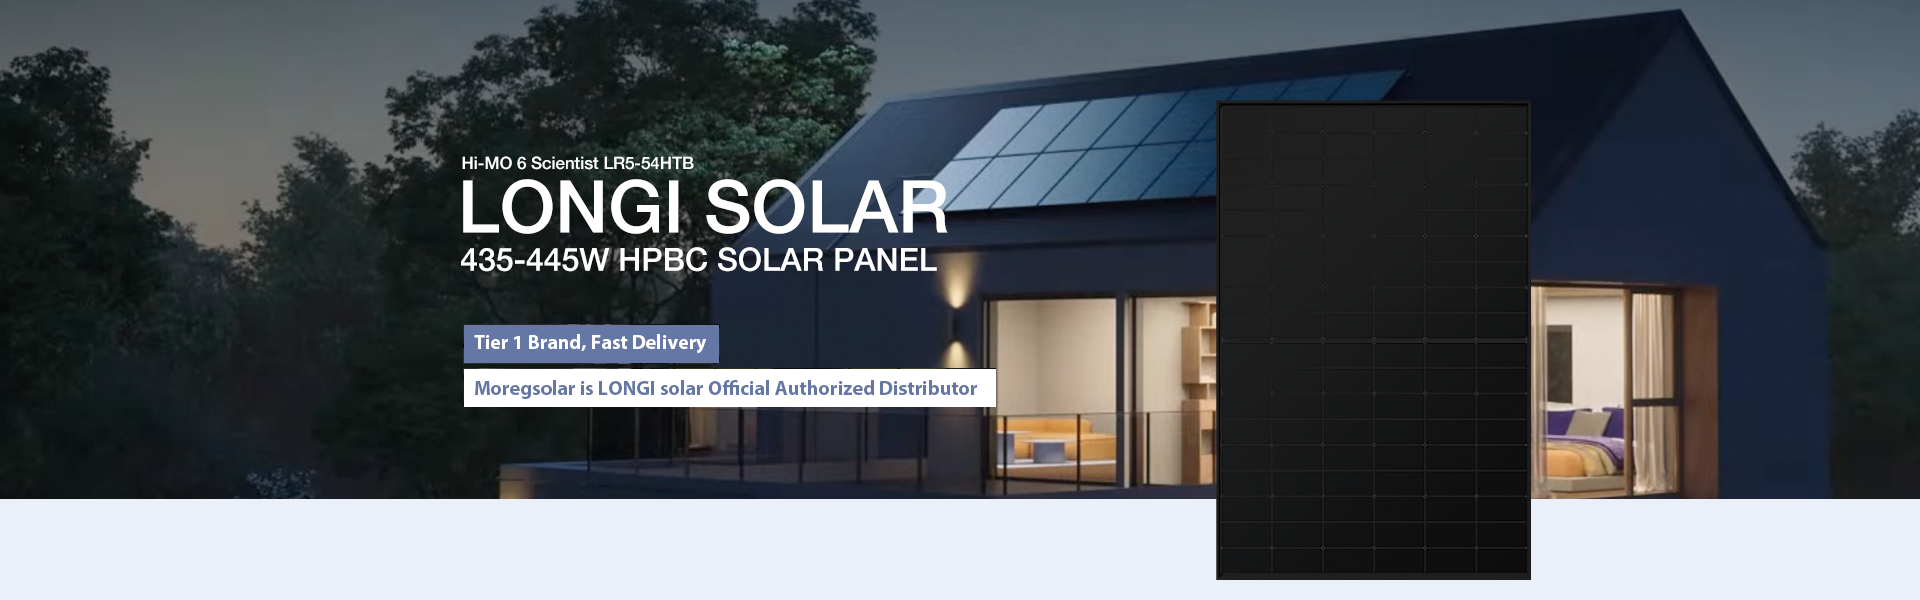 Longi solar panel Scientist black solar panel 440w 445w